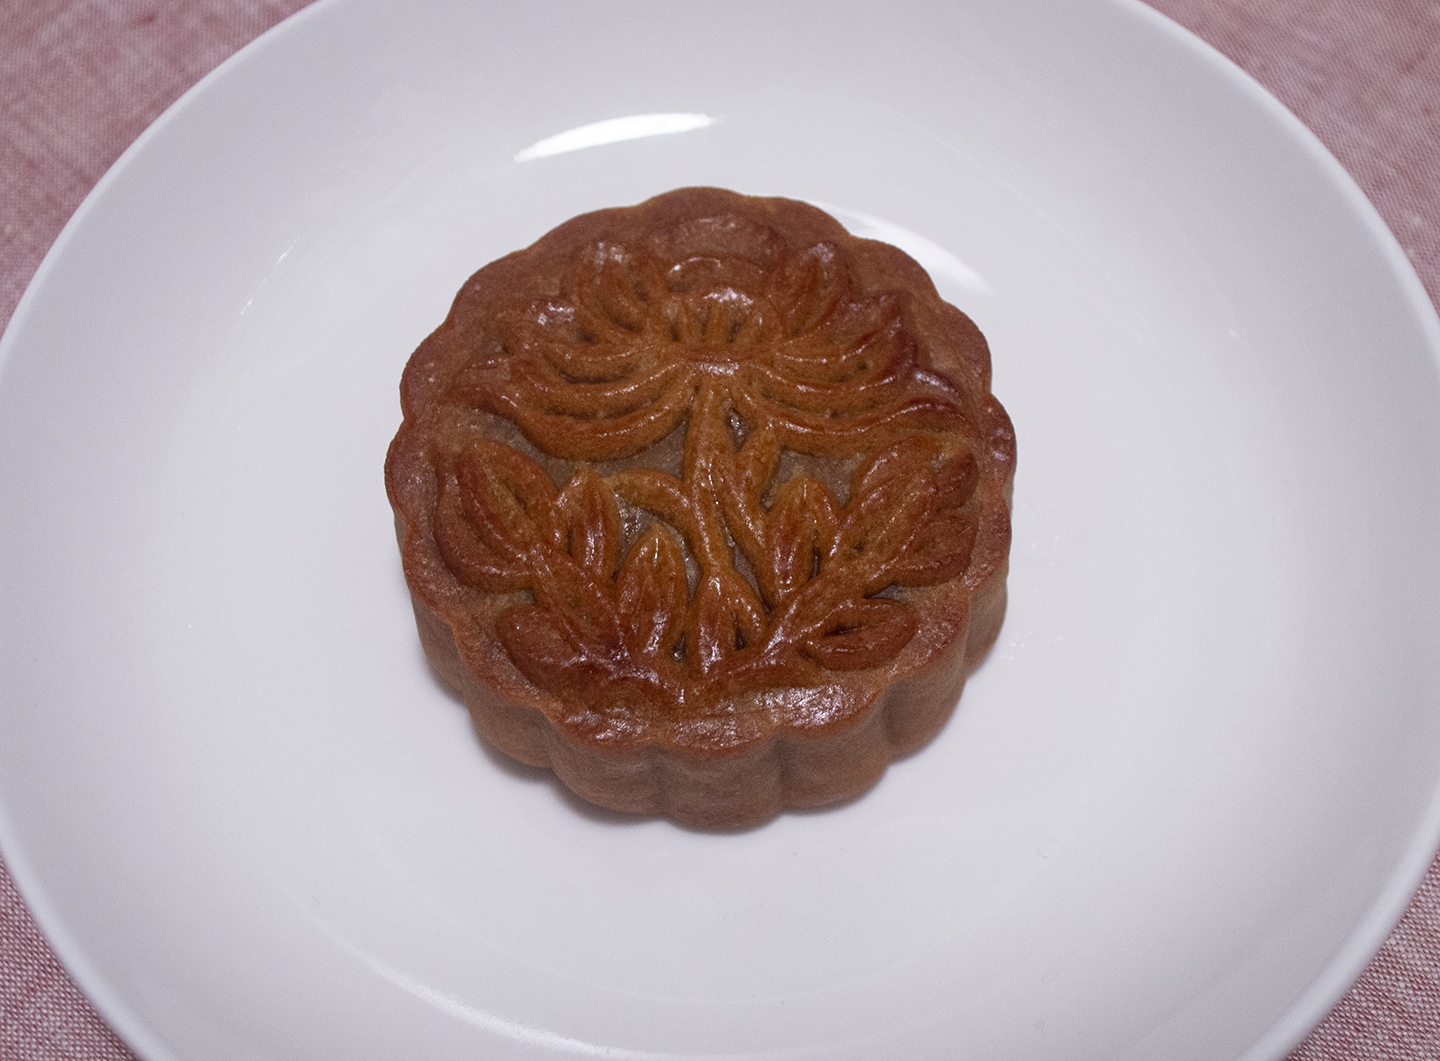 Bái Lián Róng Yuèbǐng (白蓮蓉月餅) - White Lotus Paste Mooncakes